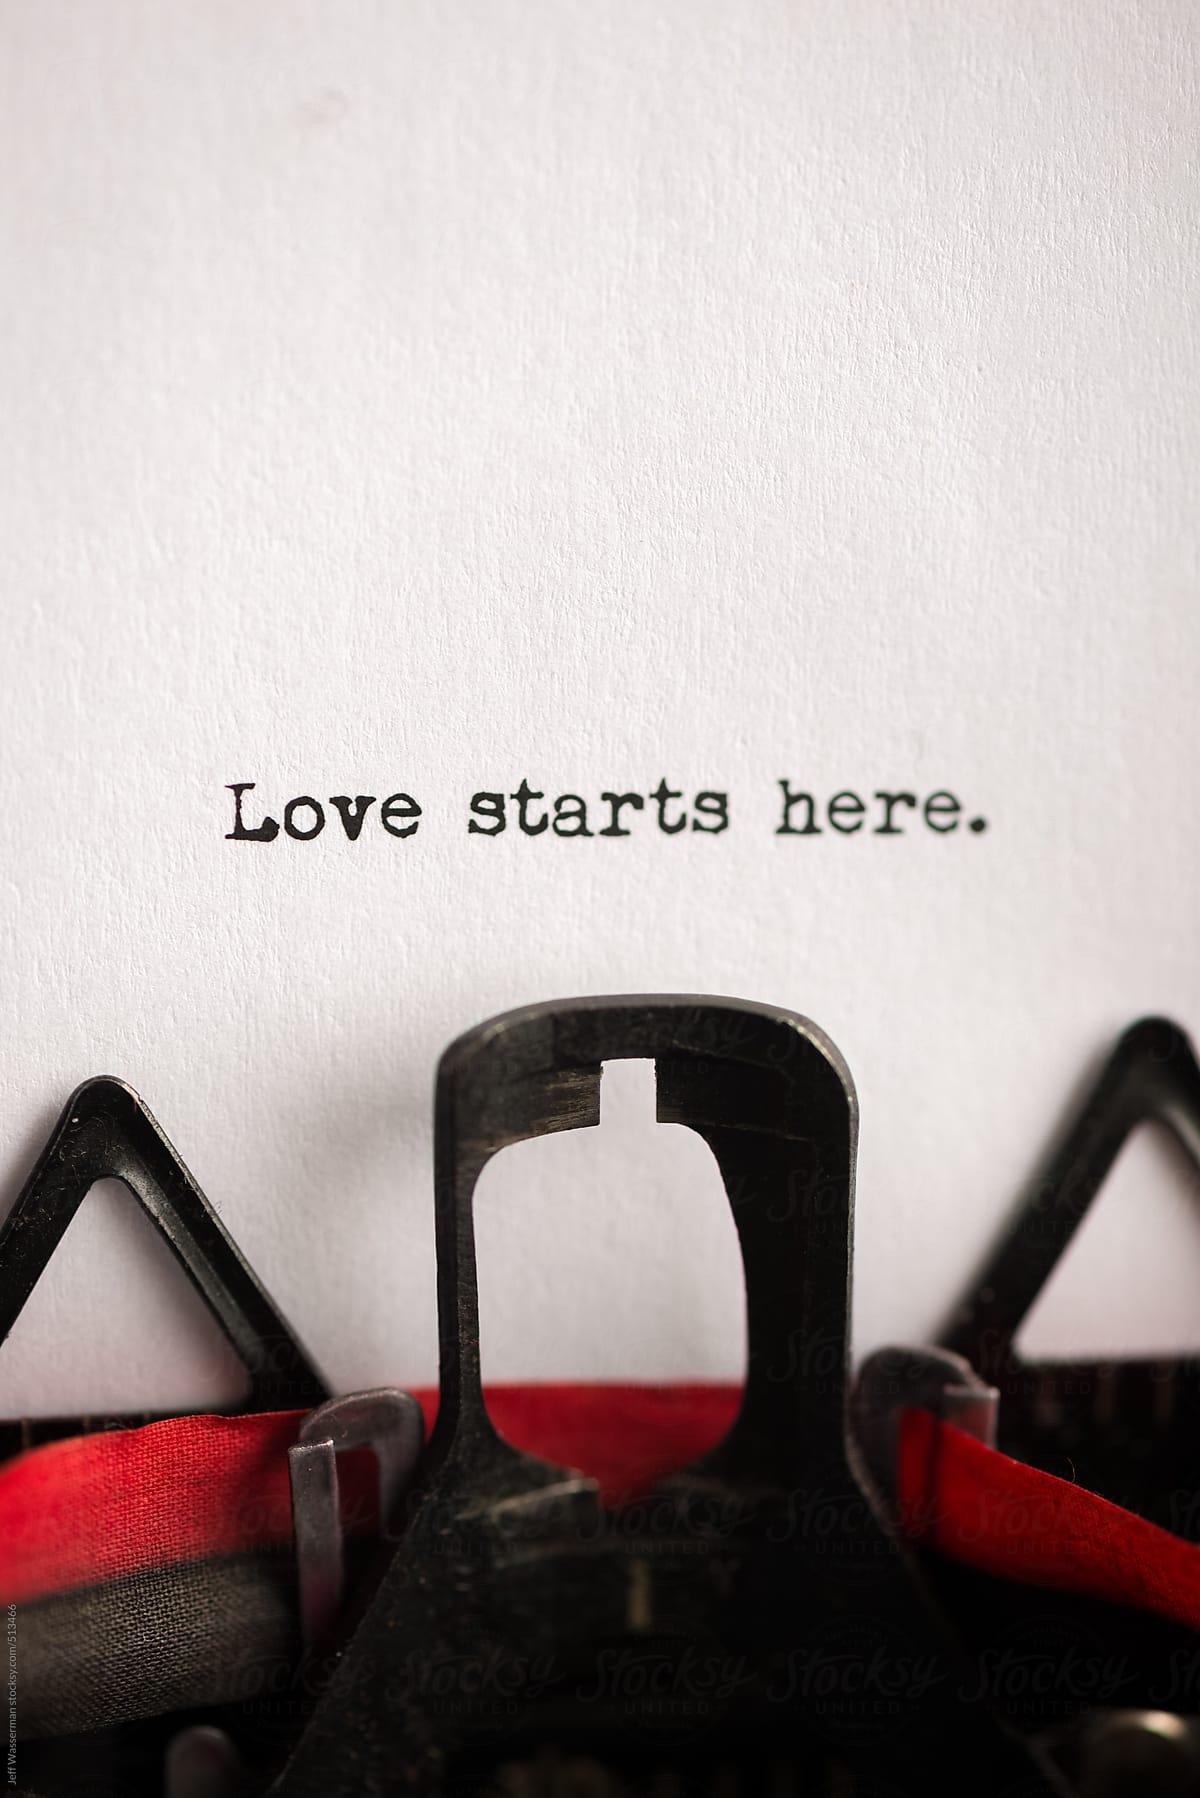 Vintage Typewriter: Love Starts Here